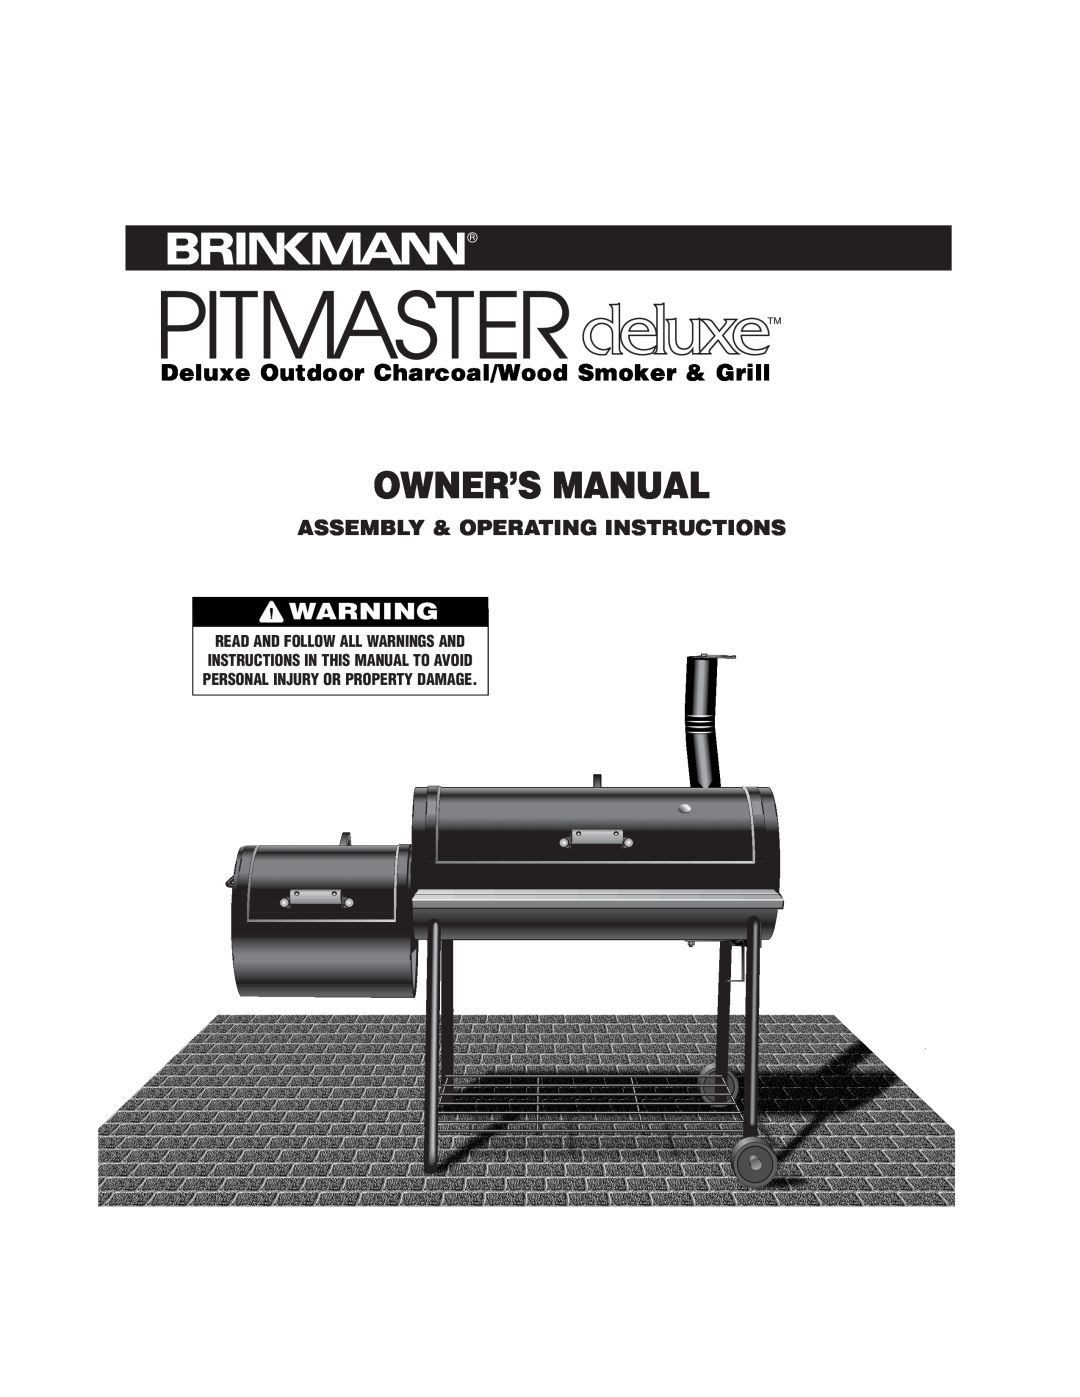 Brinkmann Charcoal/Wood Smoker owner manual Owner’S Manual, Personal Injury Or Property Damage 